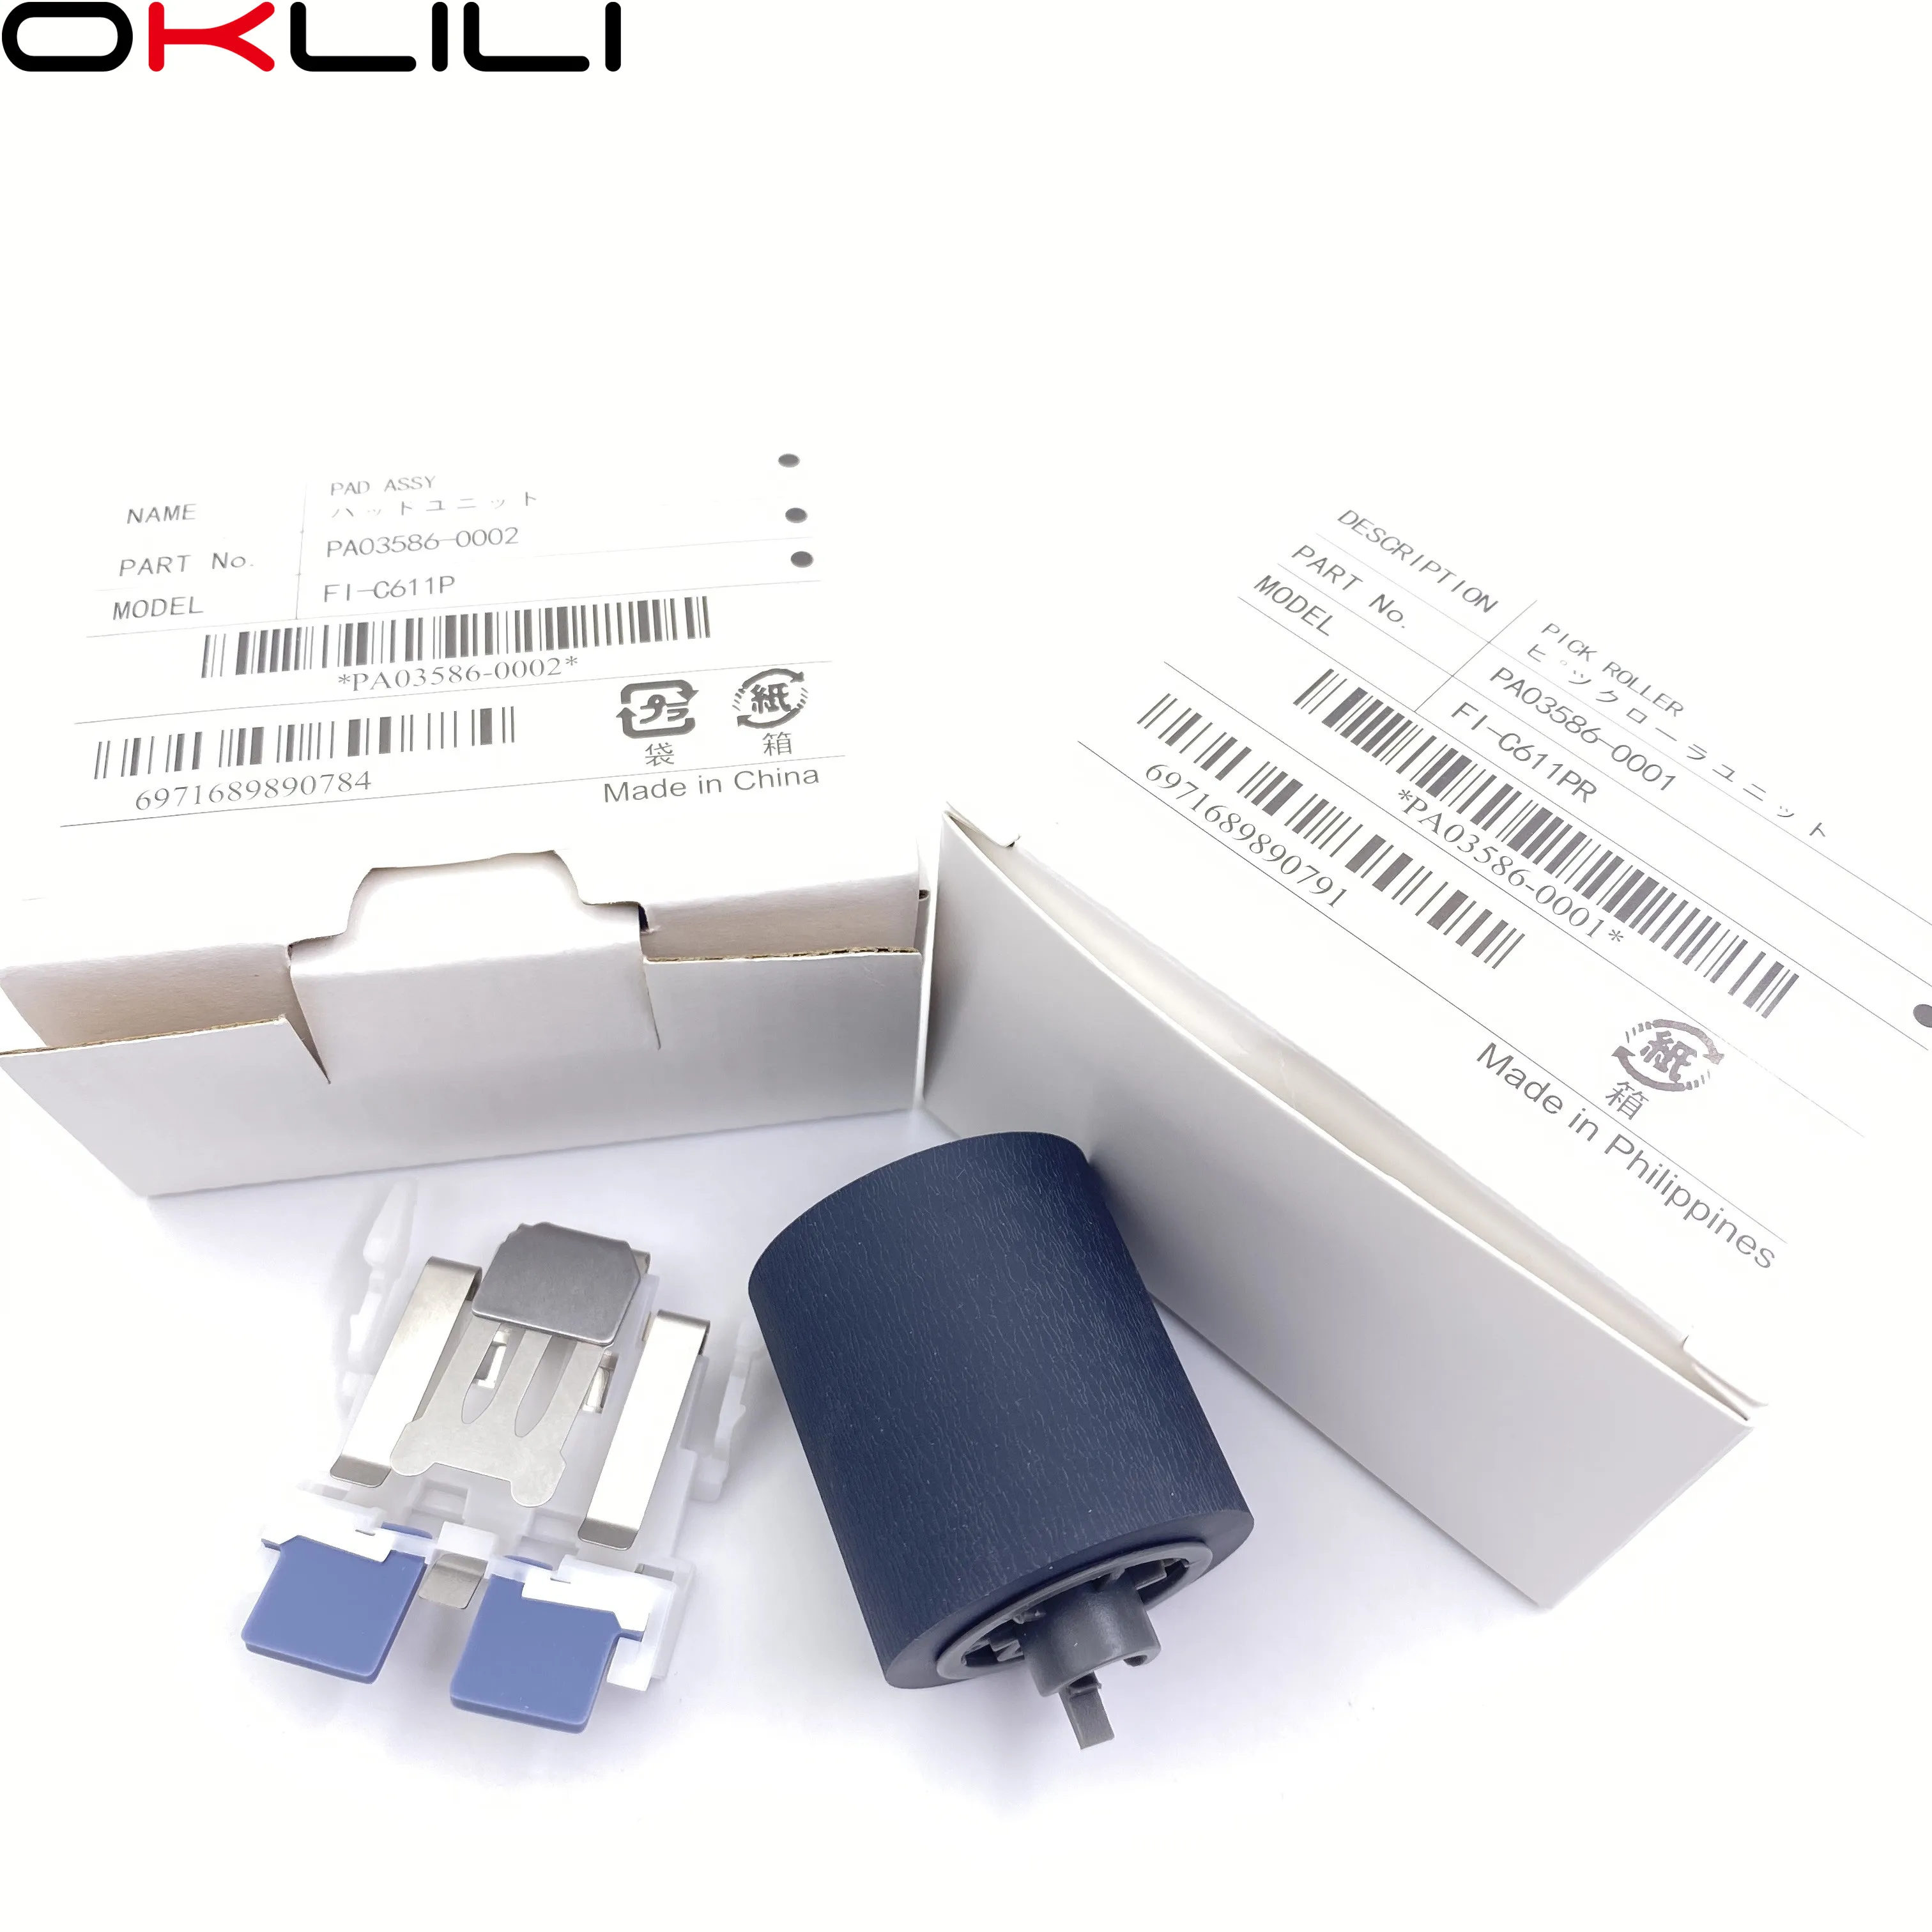 OKLILI PA03586-0001 PA03586-0002 Scanner 1 X Pickup Pick Roller 2 X Separation Pad Assembly Compatible with Fujitsu S1500 S1500M fi-6110 N1800 